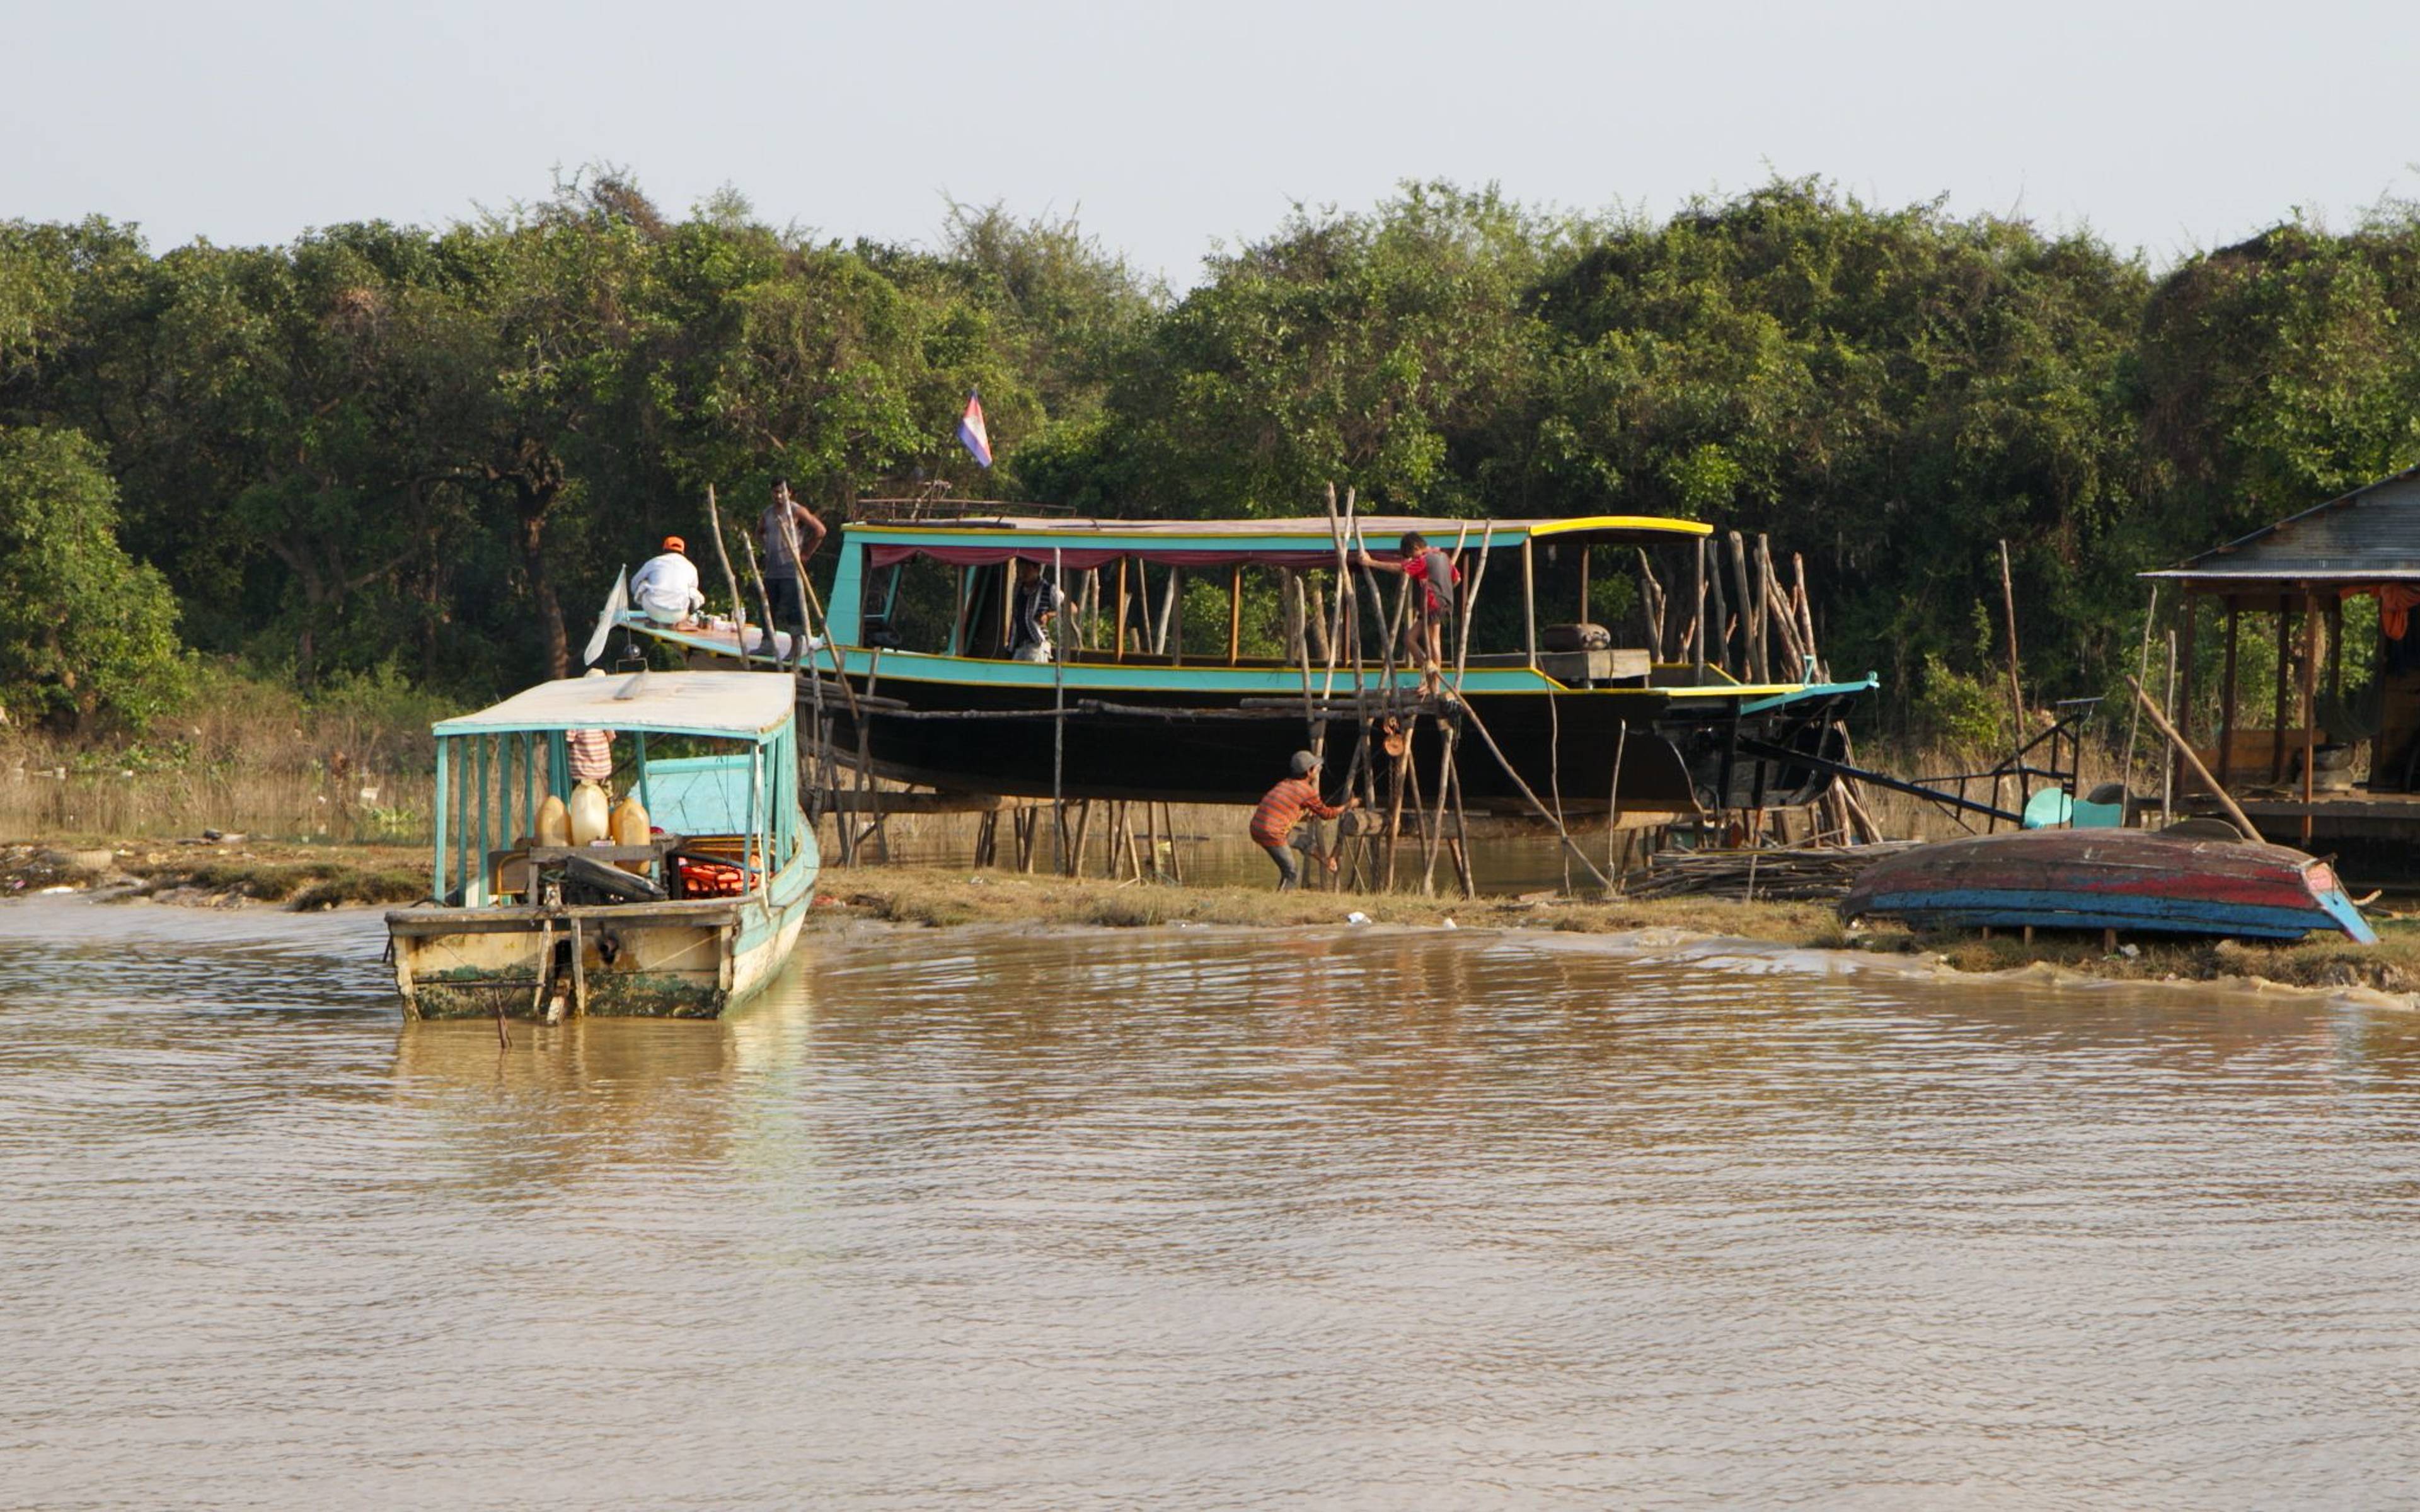 Visita al villaggio sul lago Tonle Sap 